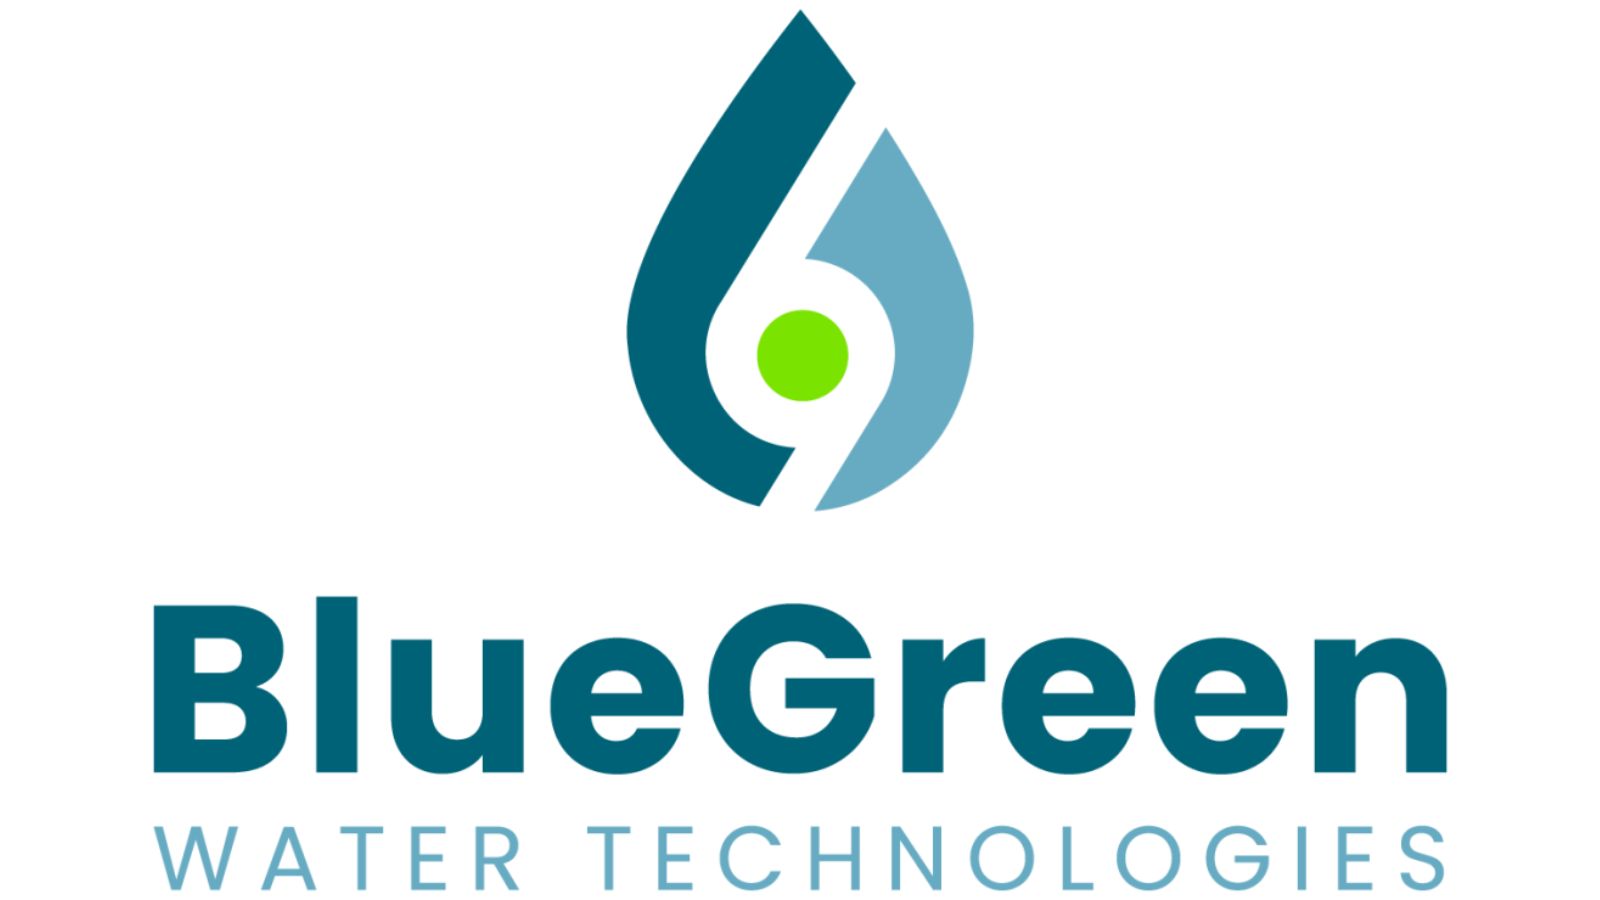 BlueGreen Water Technologies Ltd. ,致力于开发水环境相关的问题解决方案, 尤其是蓝藻水华的修复治理